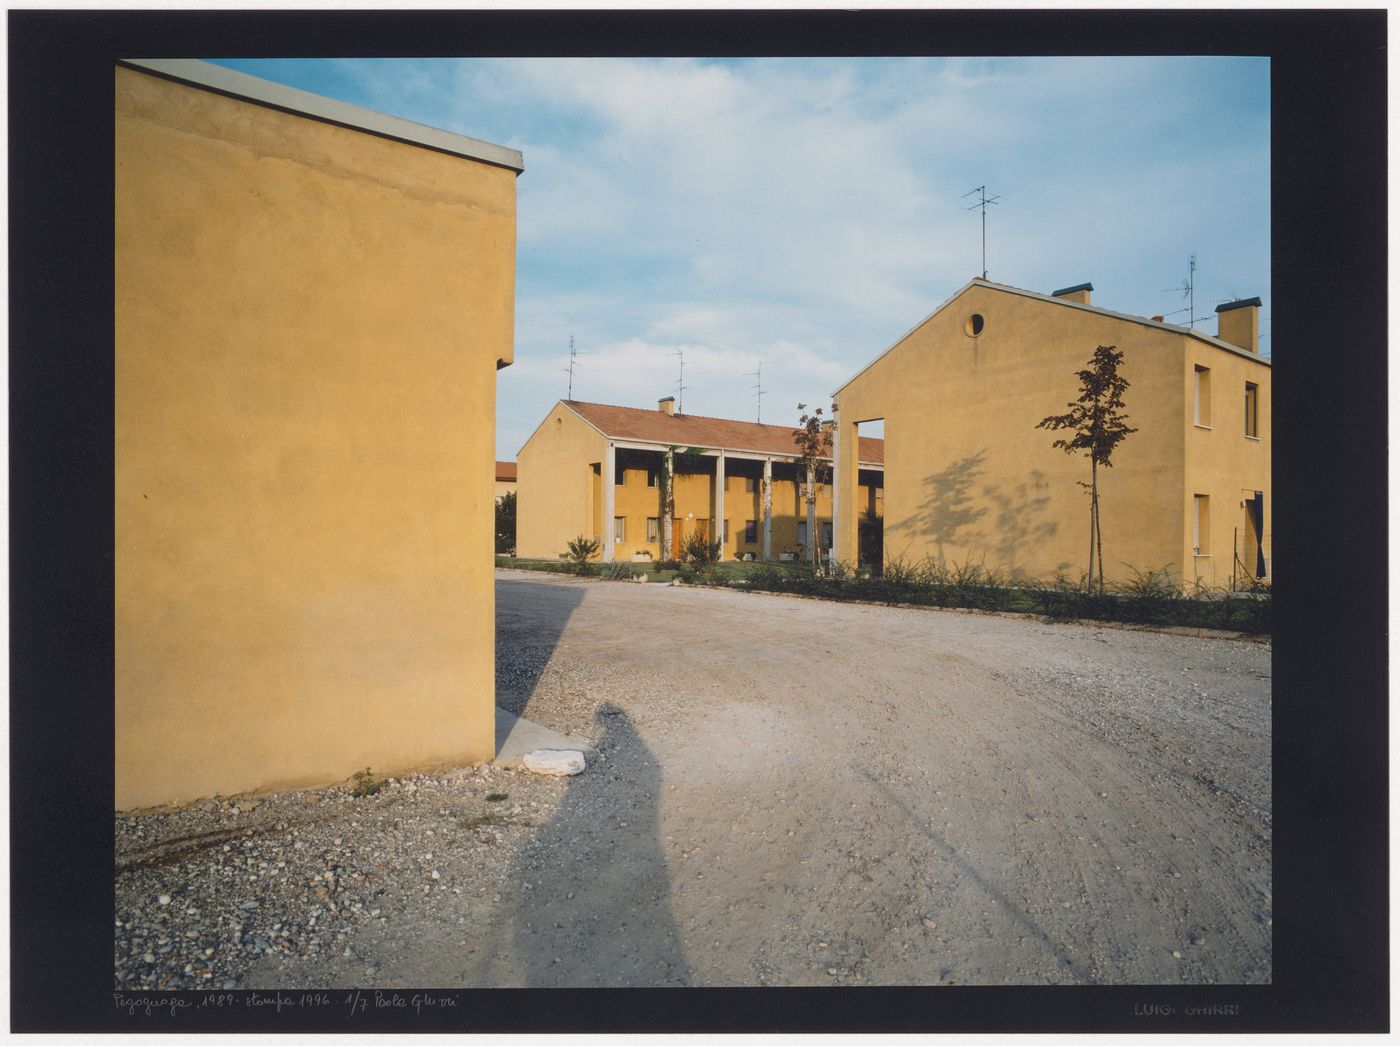 Single-family housing, Pegognaga, 1979; The housing blocks and the porticos